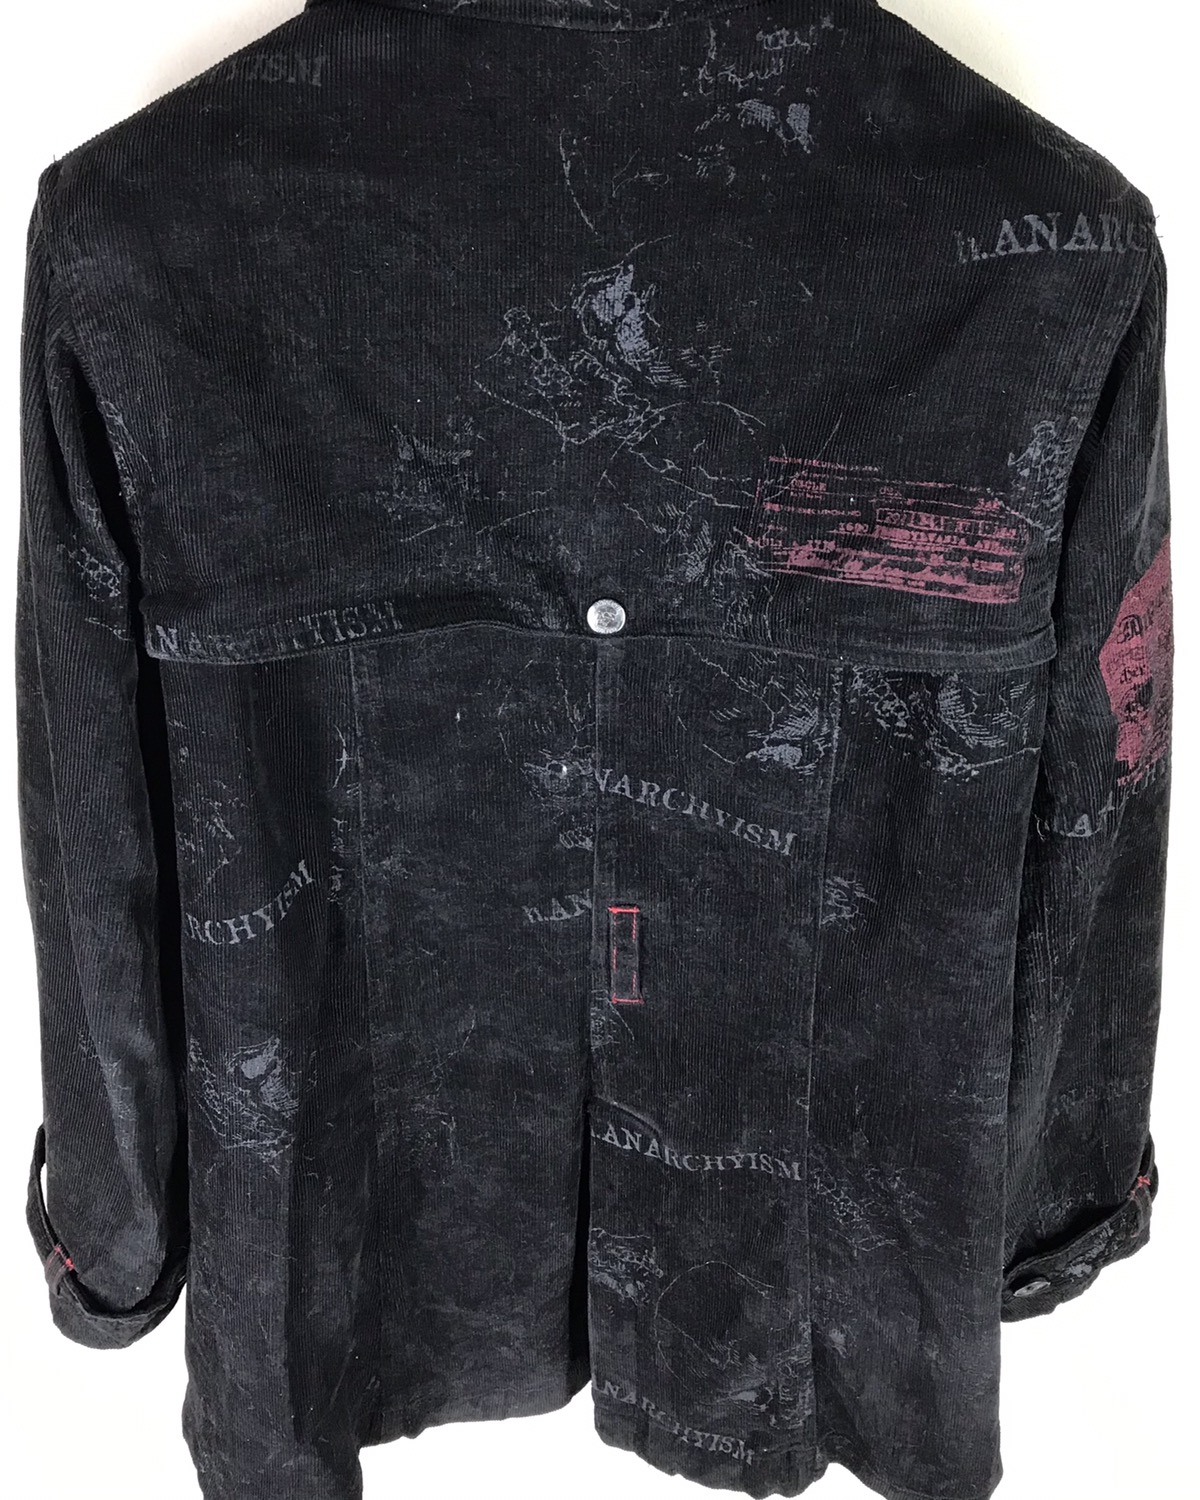 Japanese Brand - H. ANARCHYISM h.naoto Punk Black Long Jacket